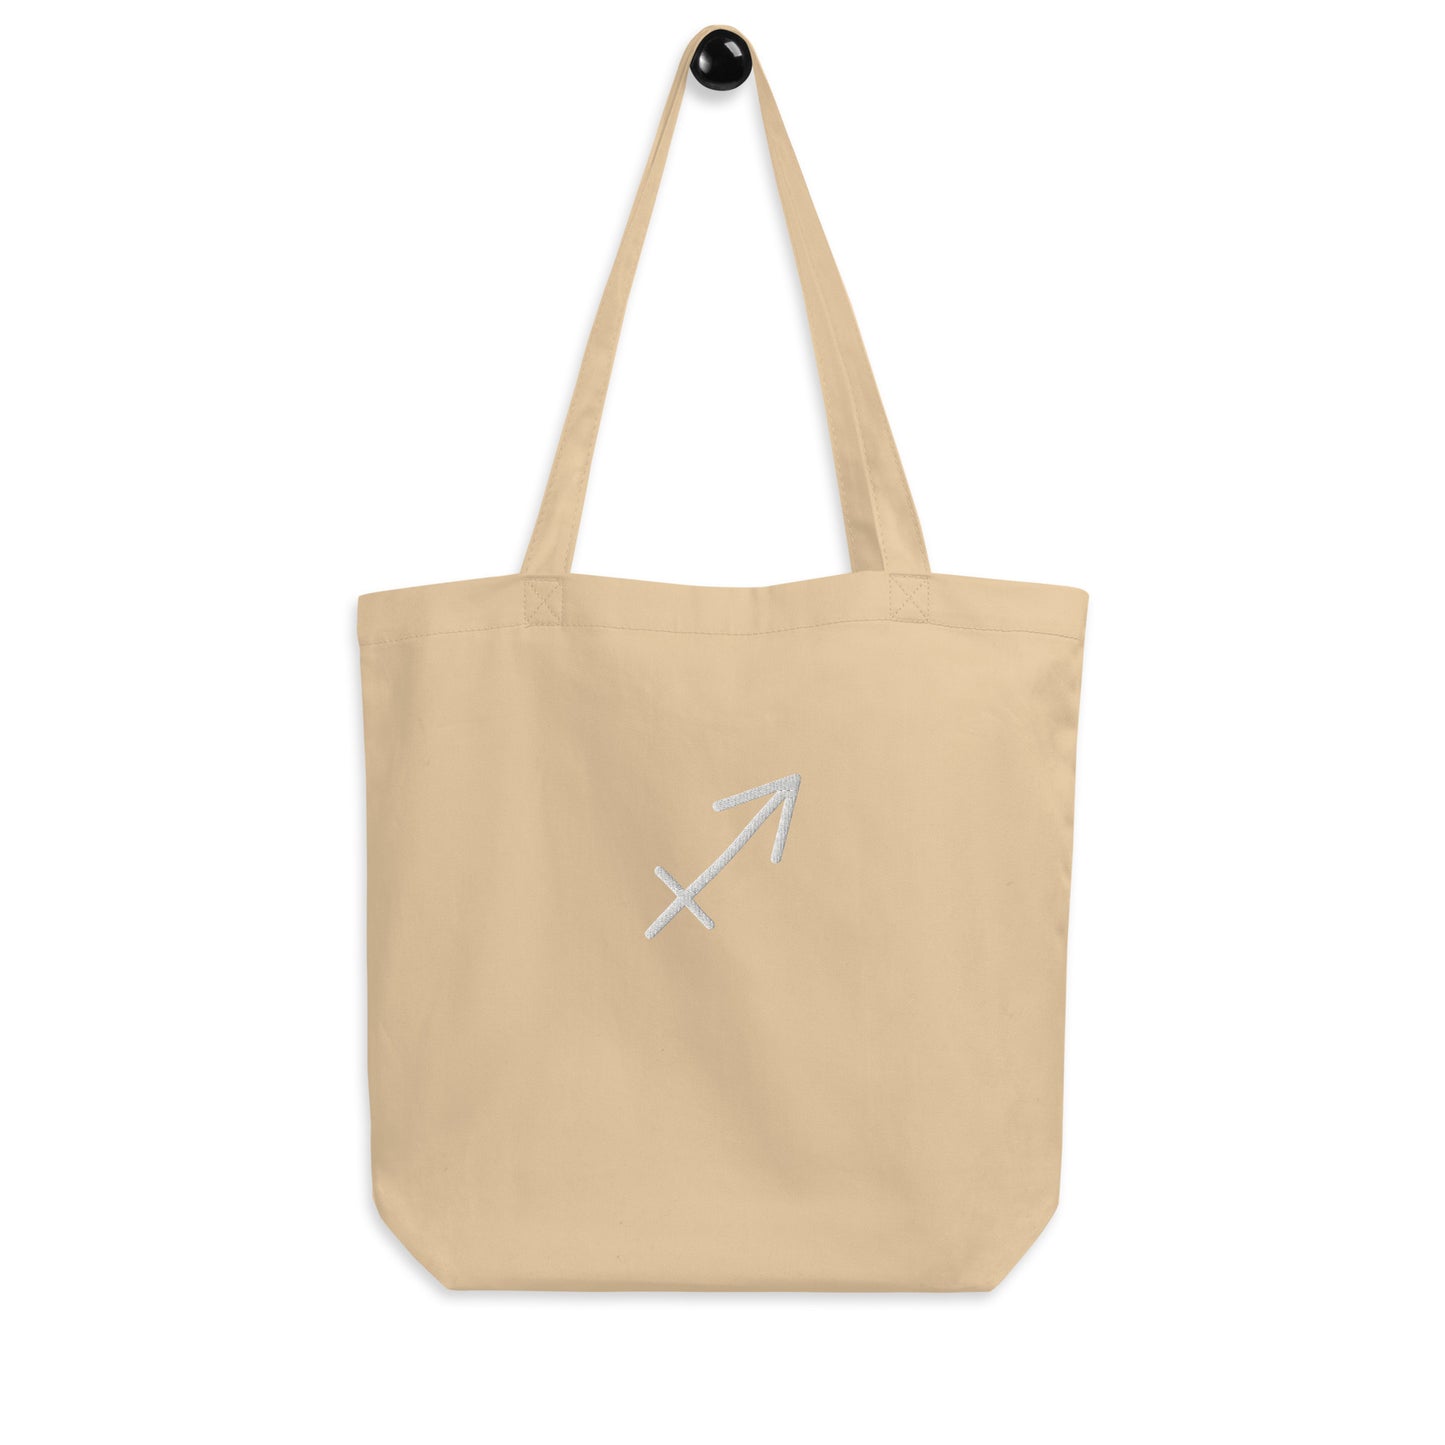 Sagittarius - Small Open Tote Bag - White Thread